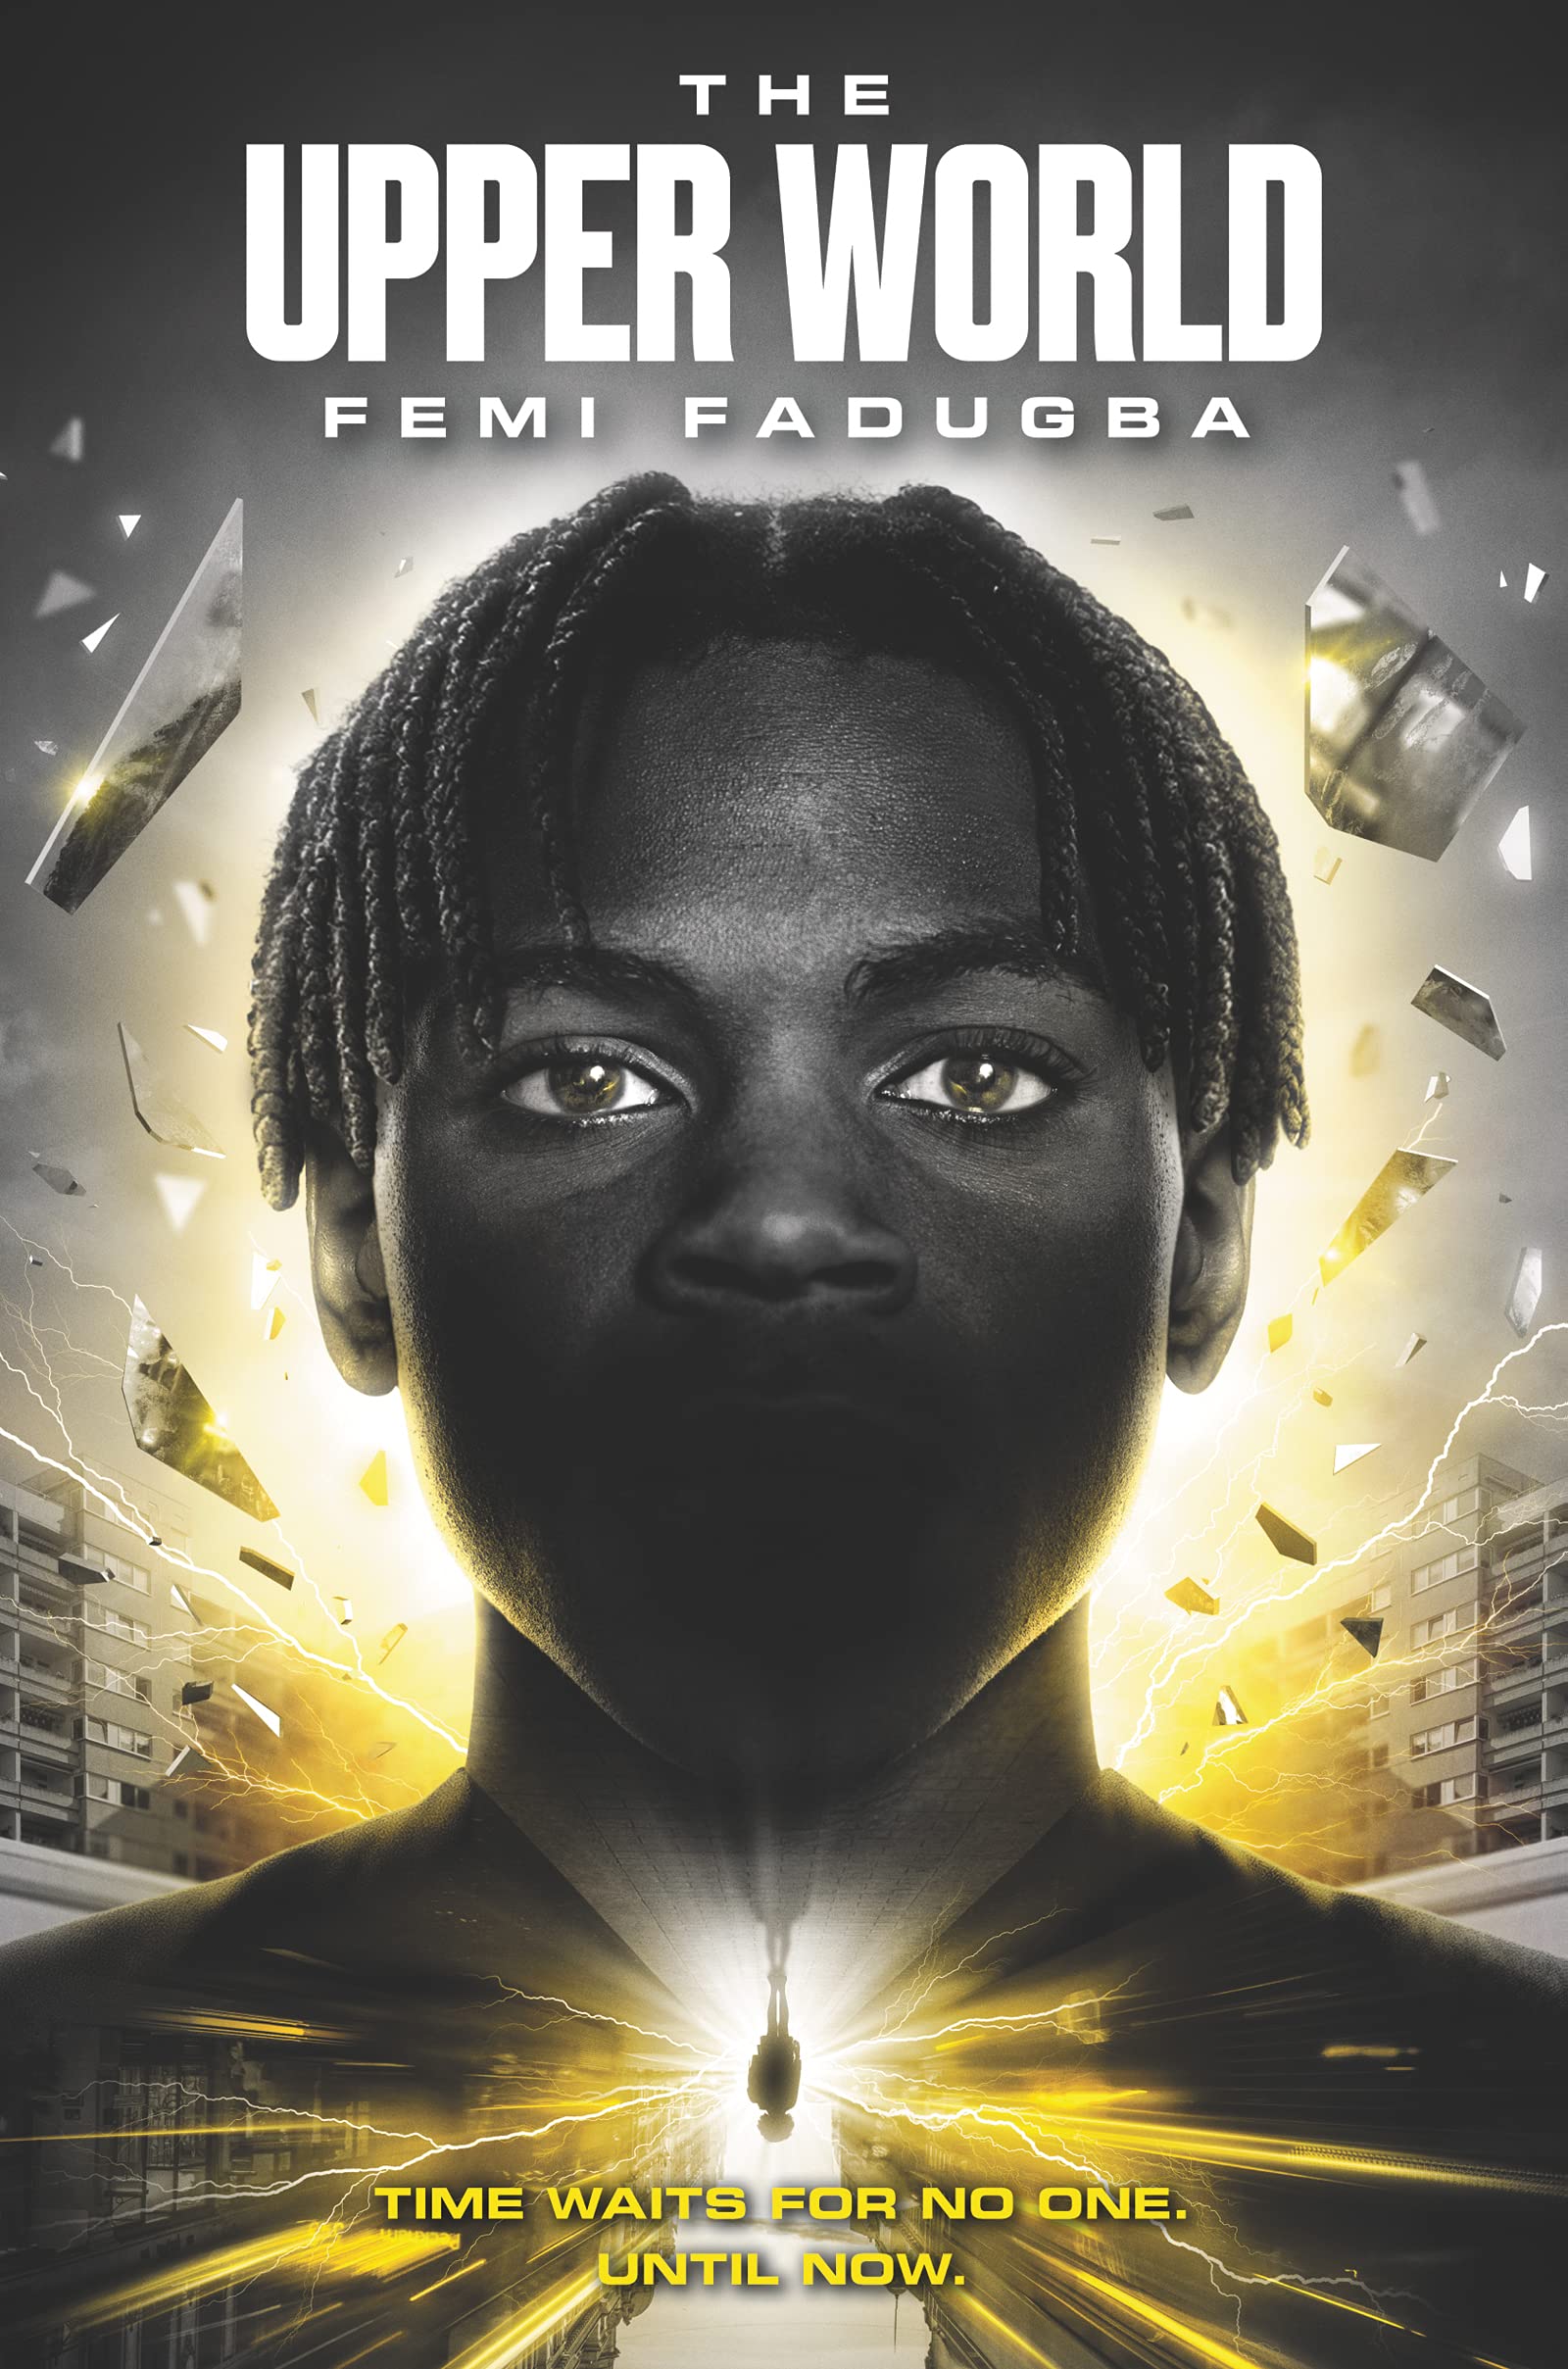 Cover of “The Upper World” by Femi Fadugba